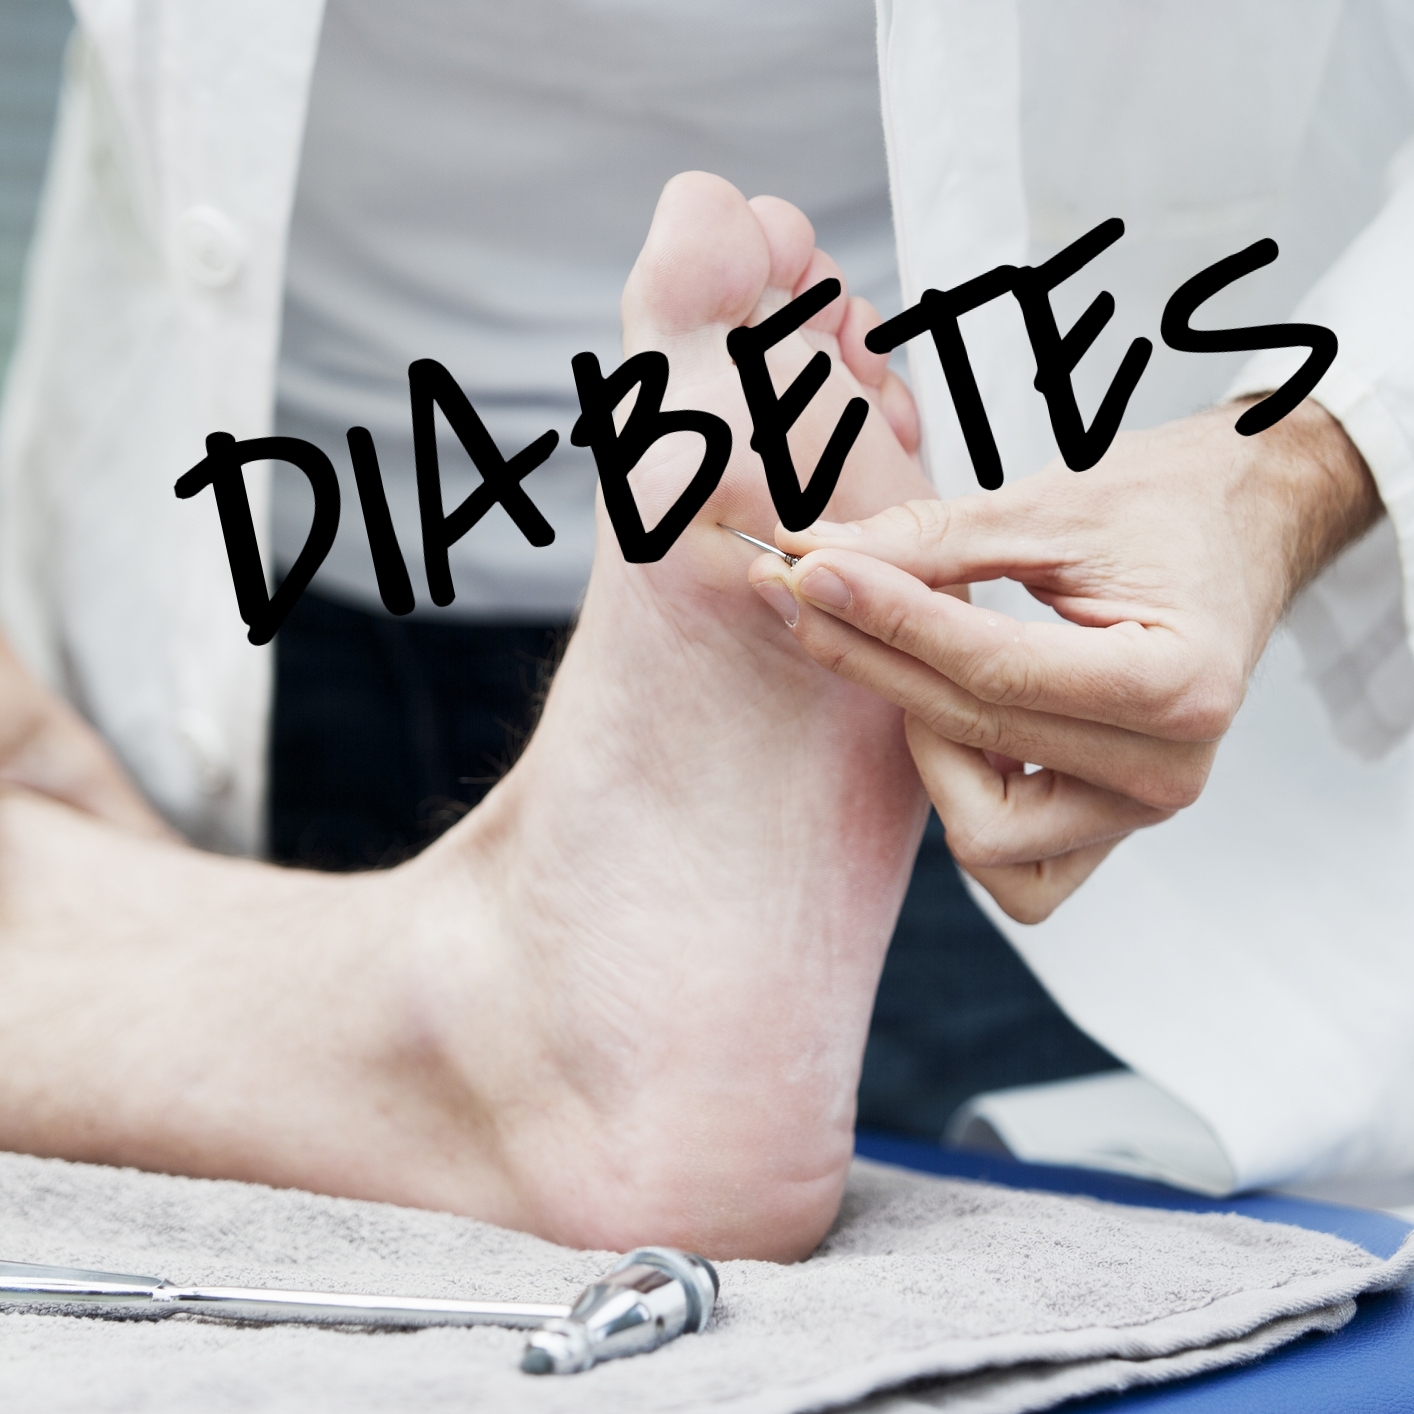 Diabetes Foot Care